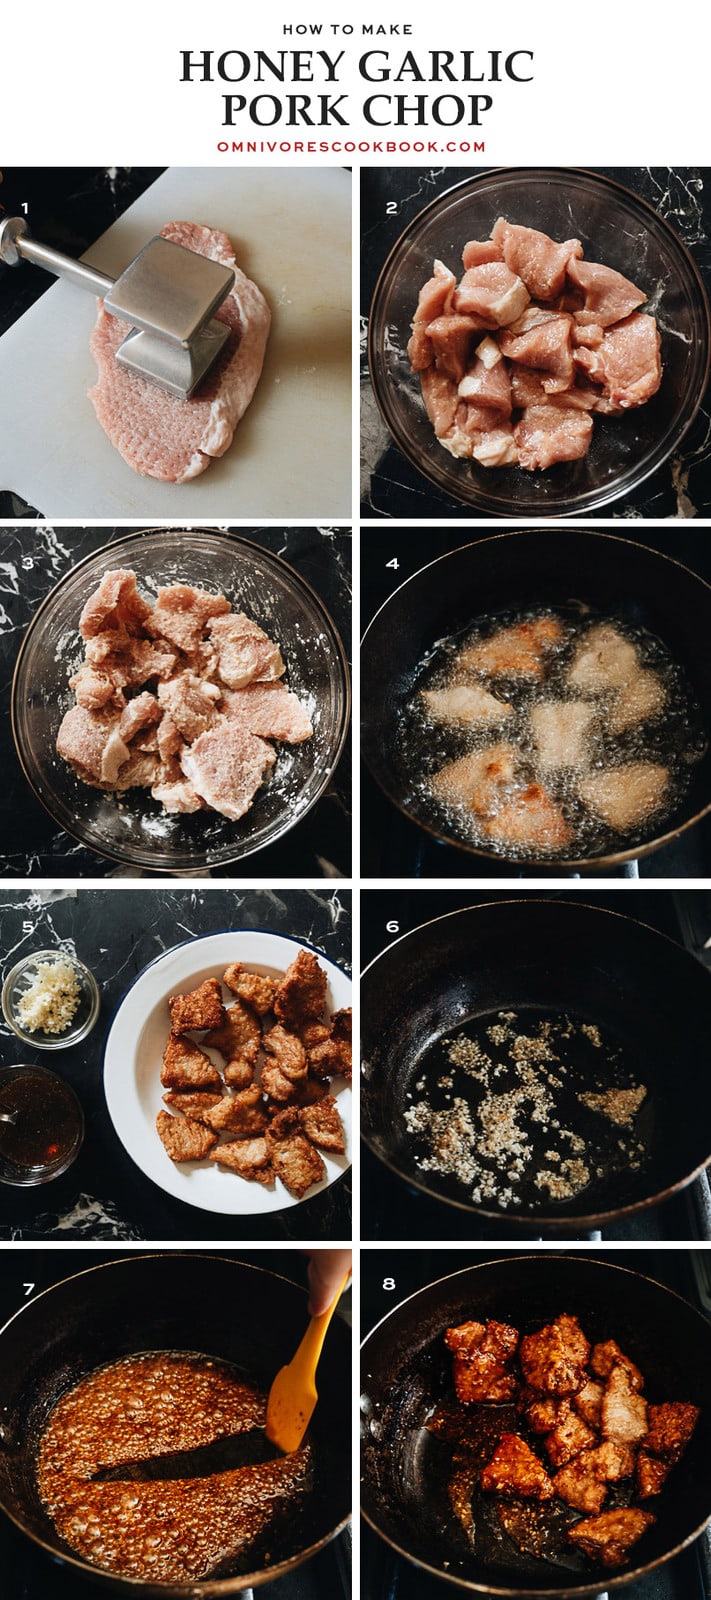 How to make honey garlic pork chop step-by-step